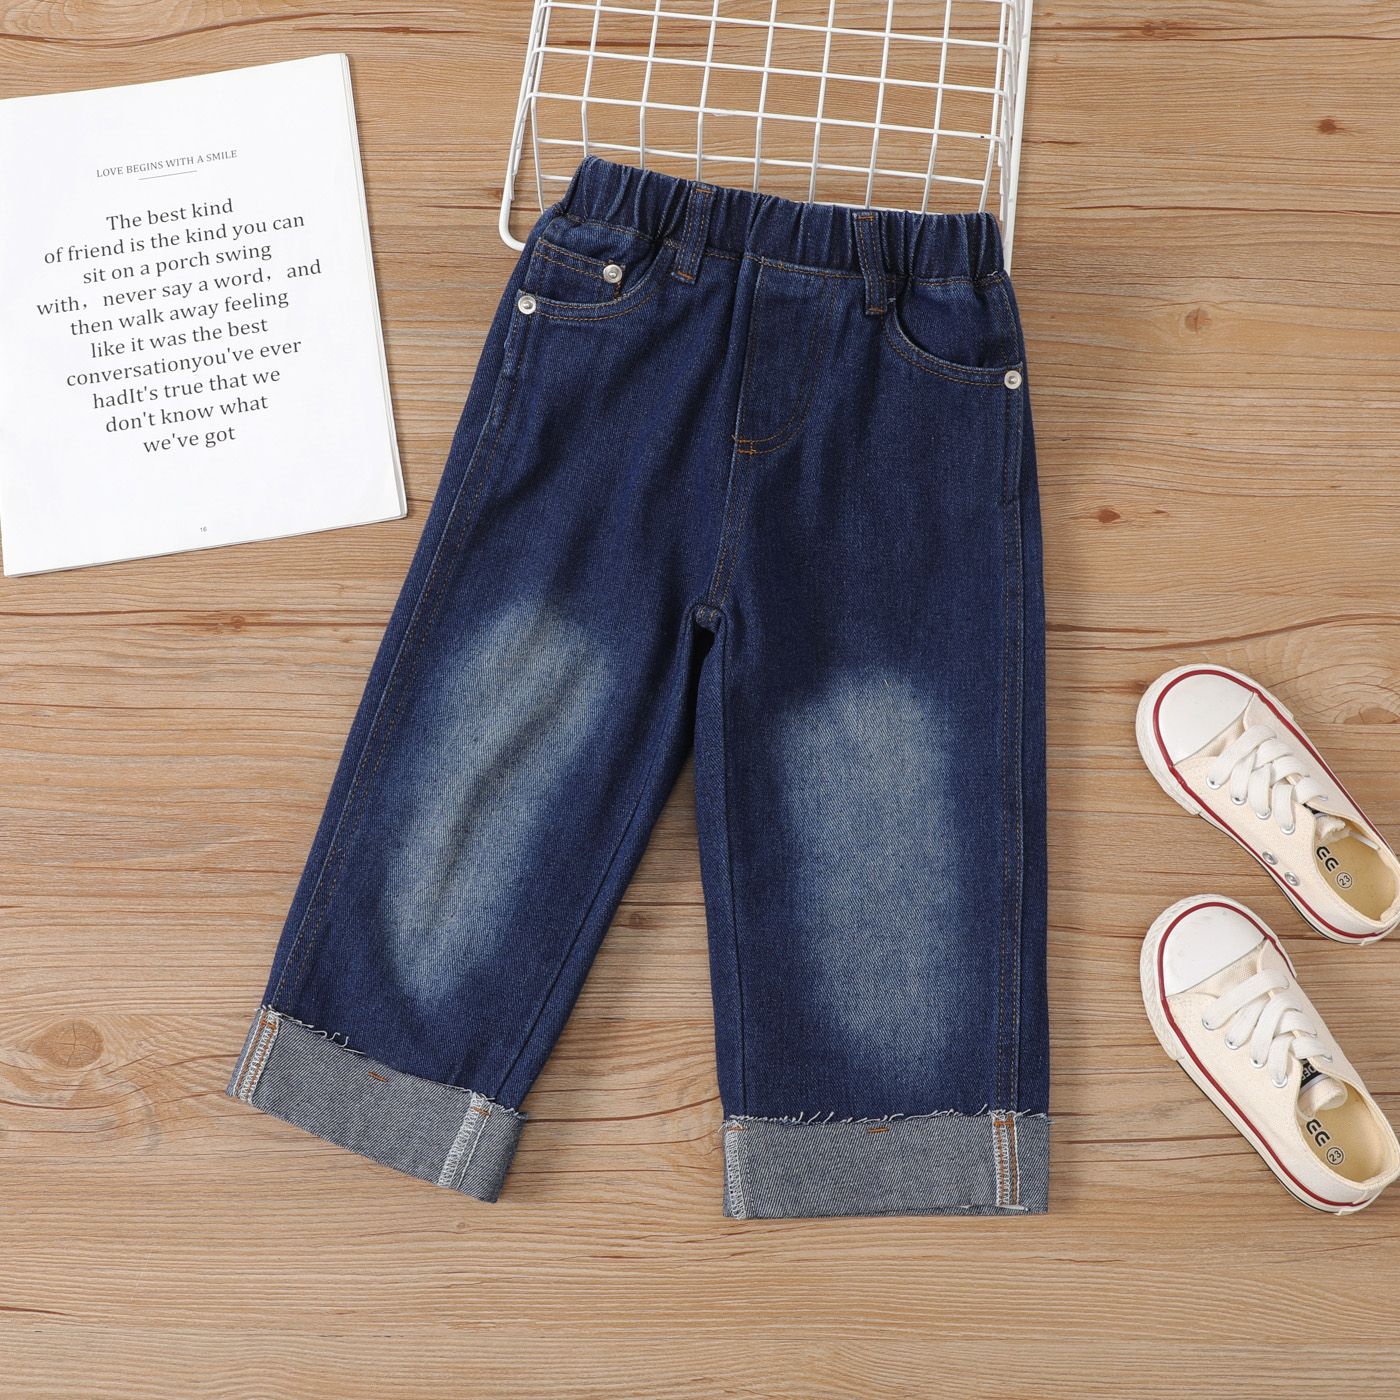 Kameel Manhattan idioom Toddler Boy/Girl Cuffed Hem Jeans Only € 15,99 PatPat DE Mobile